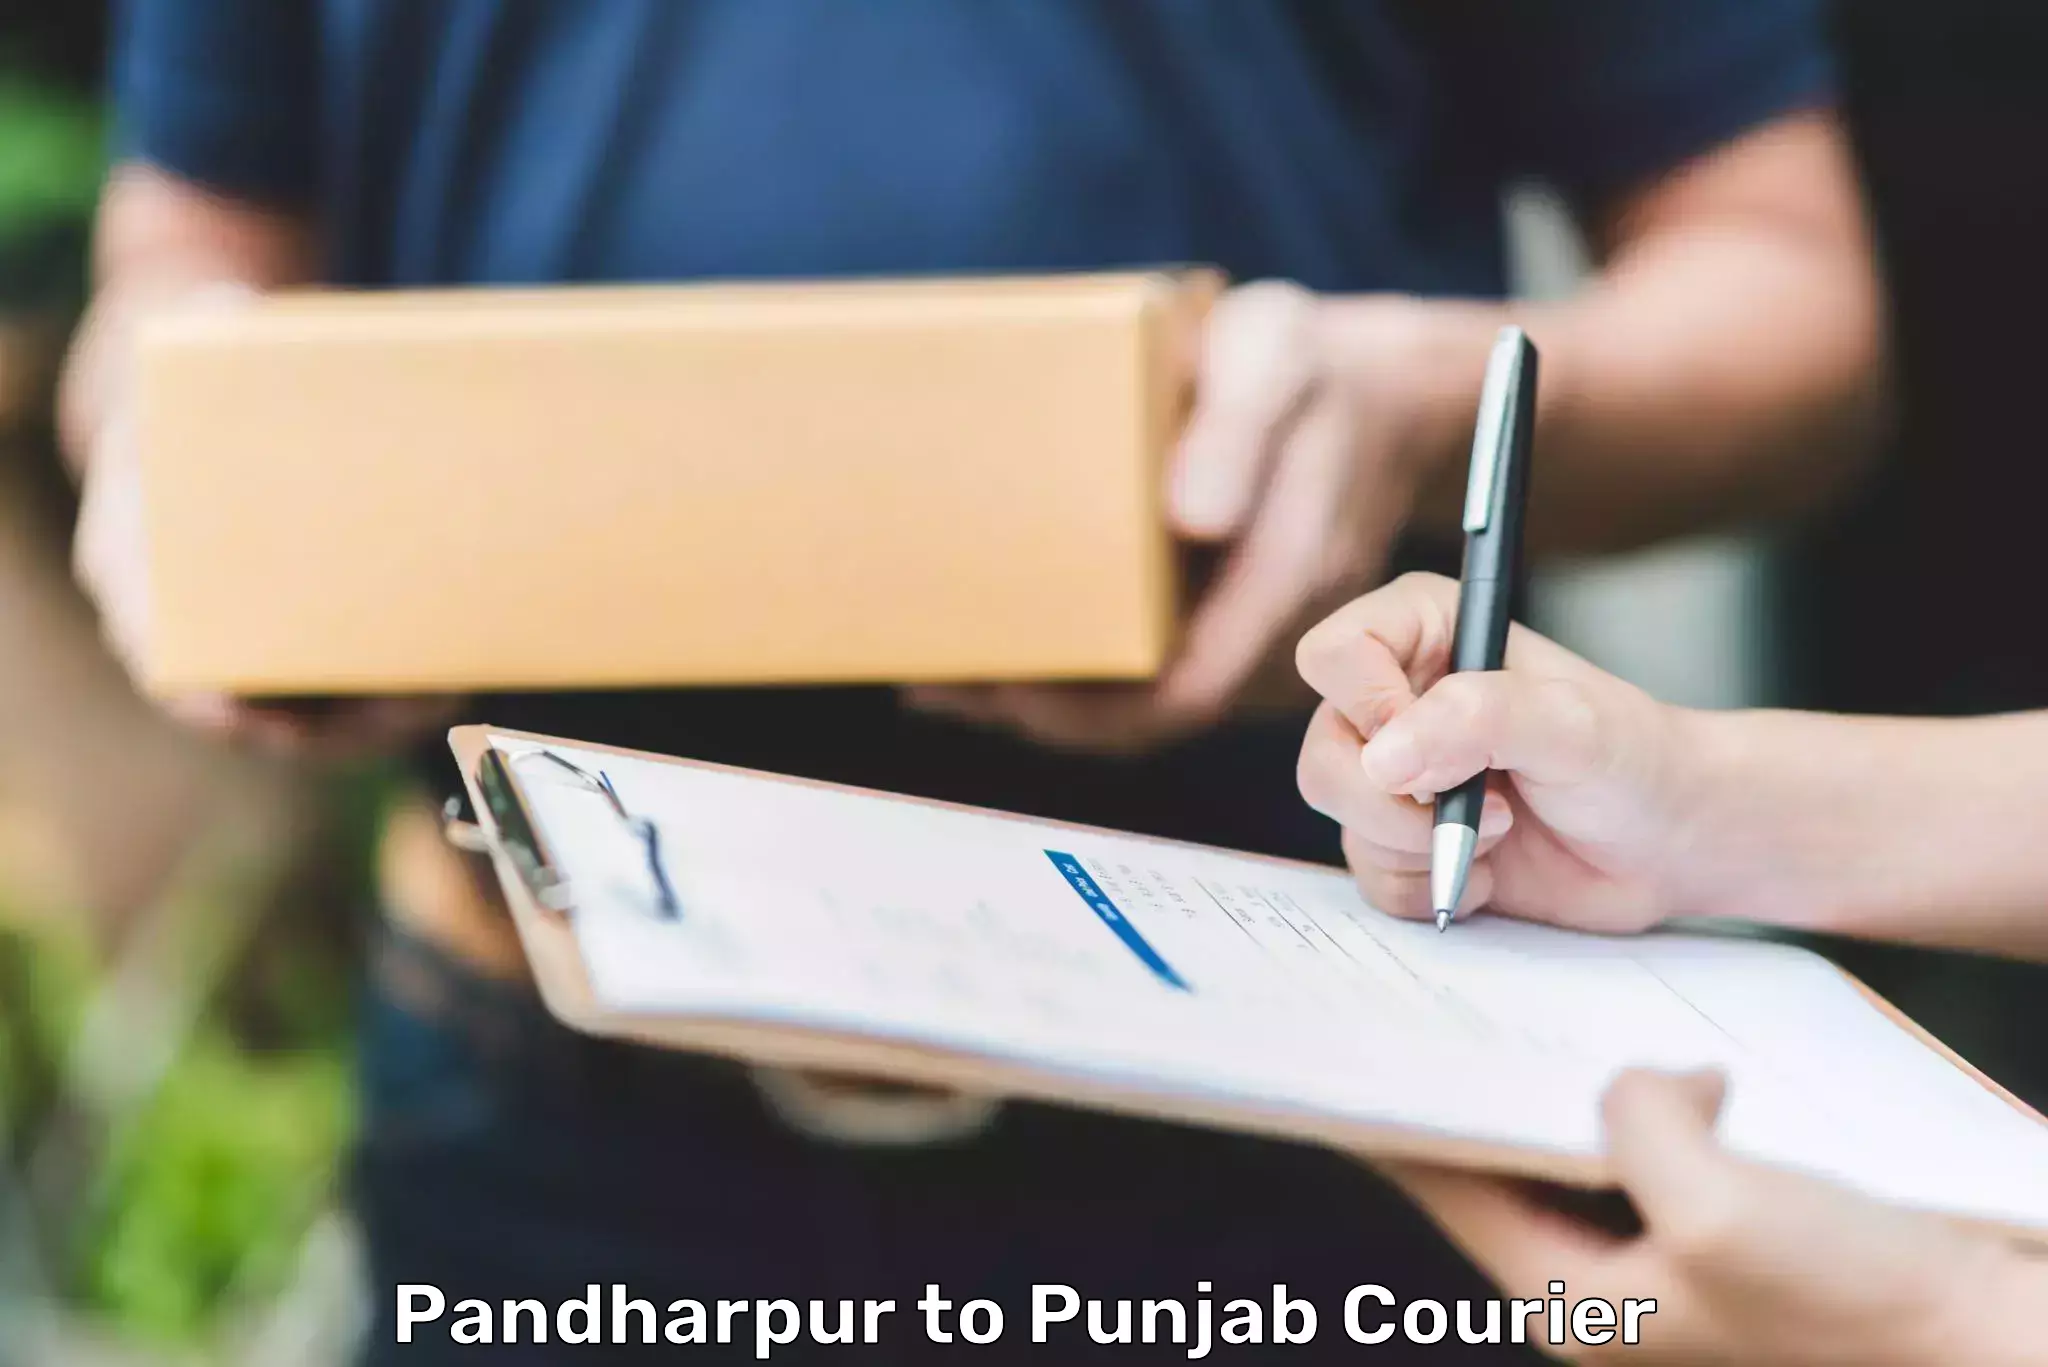 Budget-friendly shipping Pandharpur to Bathinda